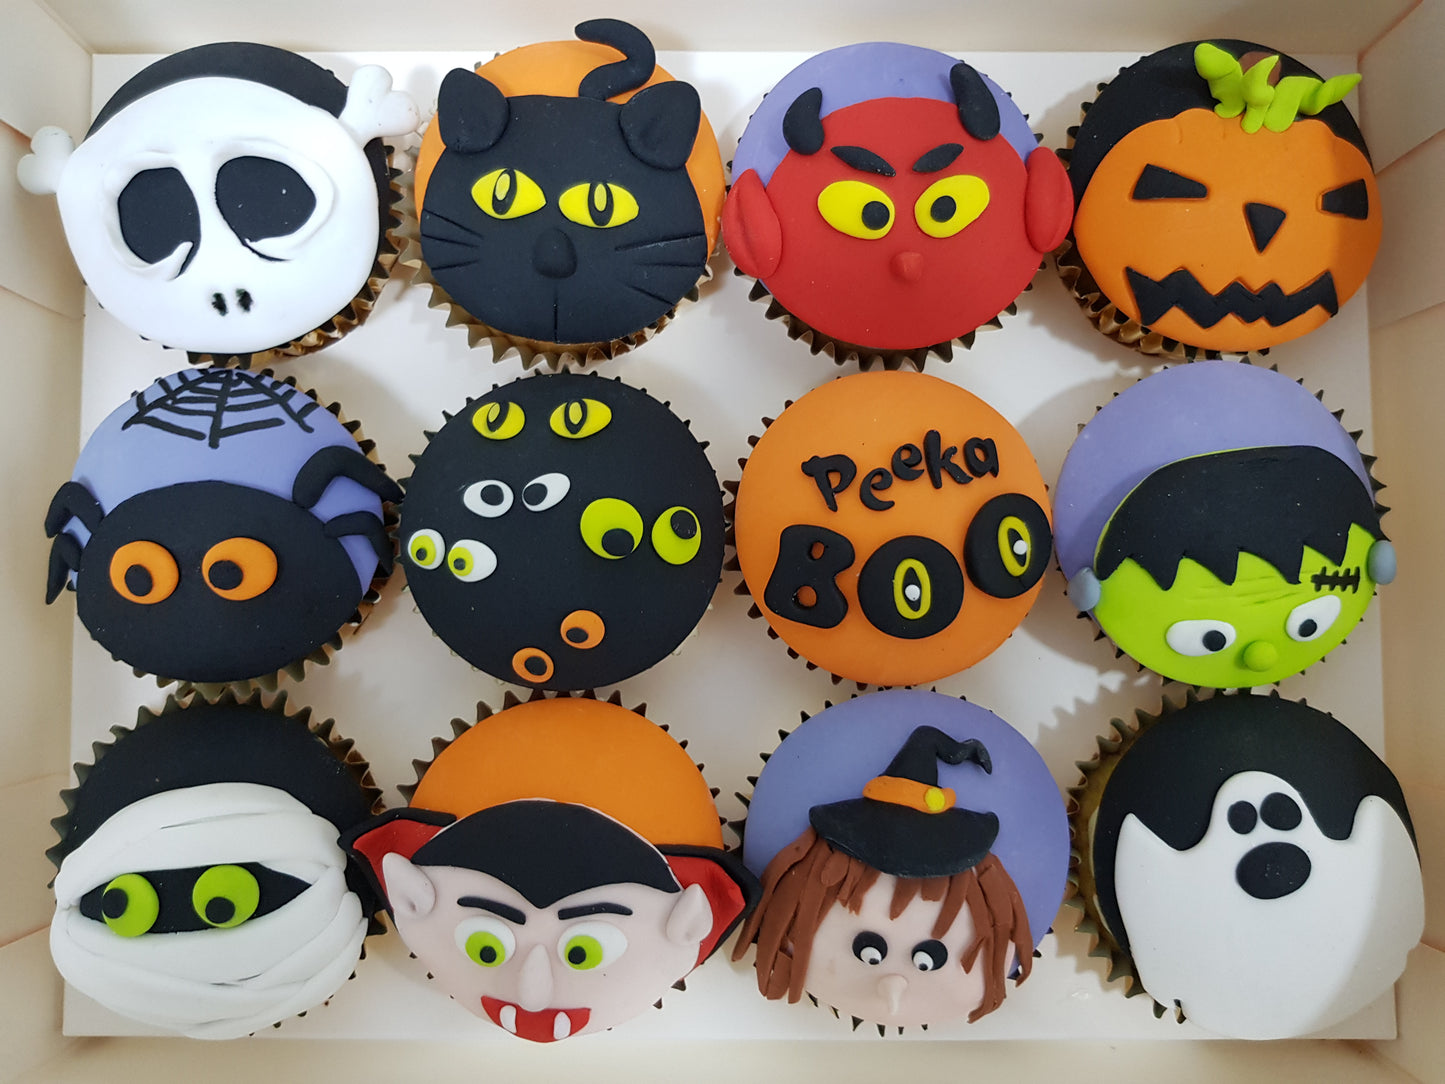 Halloween Cupcakes - Peeka Boo (Box of 12) - Cuppacakes - Singapore's Very Own Cupcakes Shop